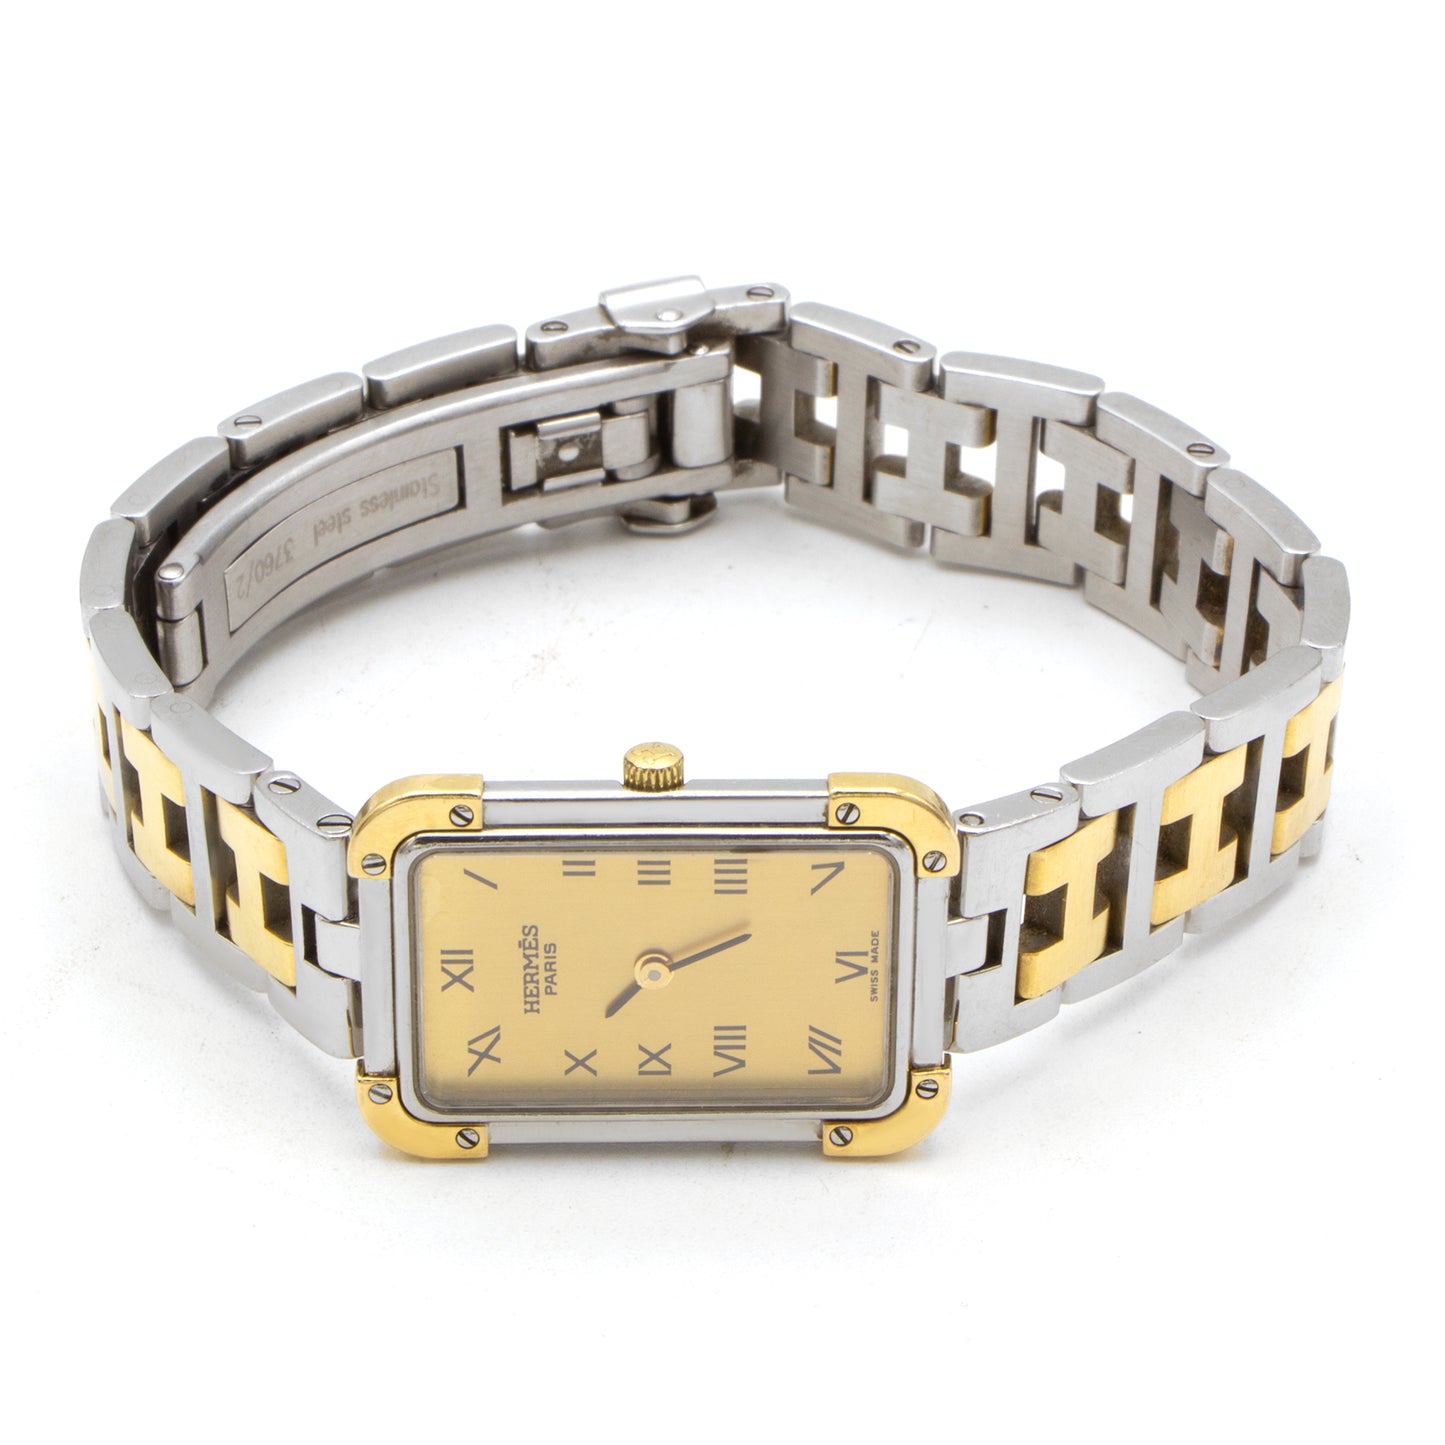 Hermès Croisière watch